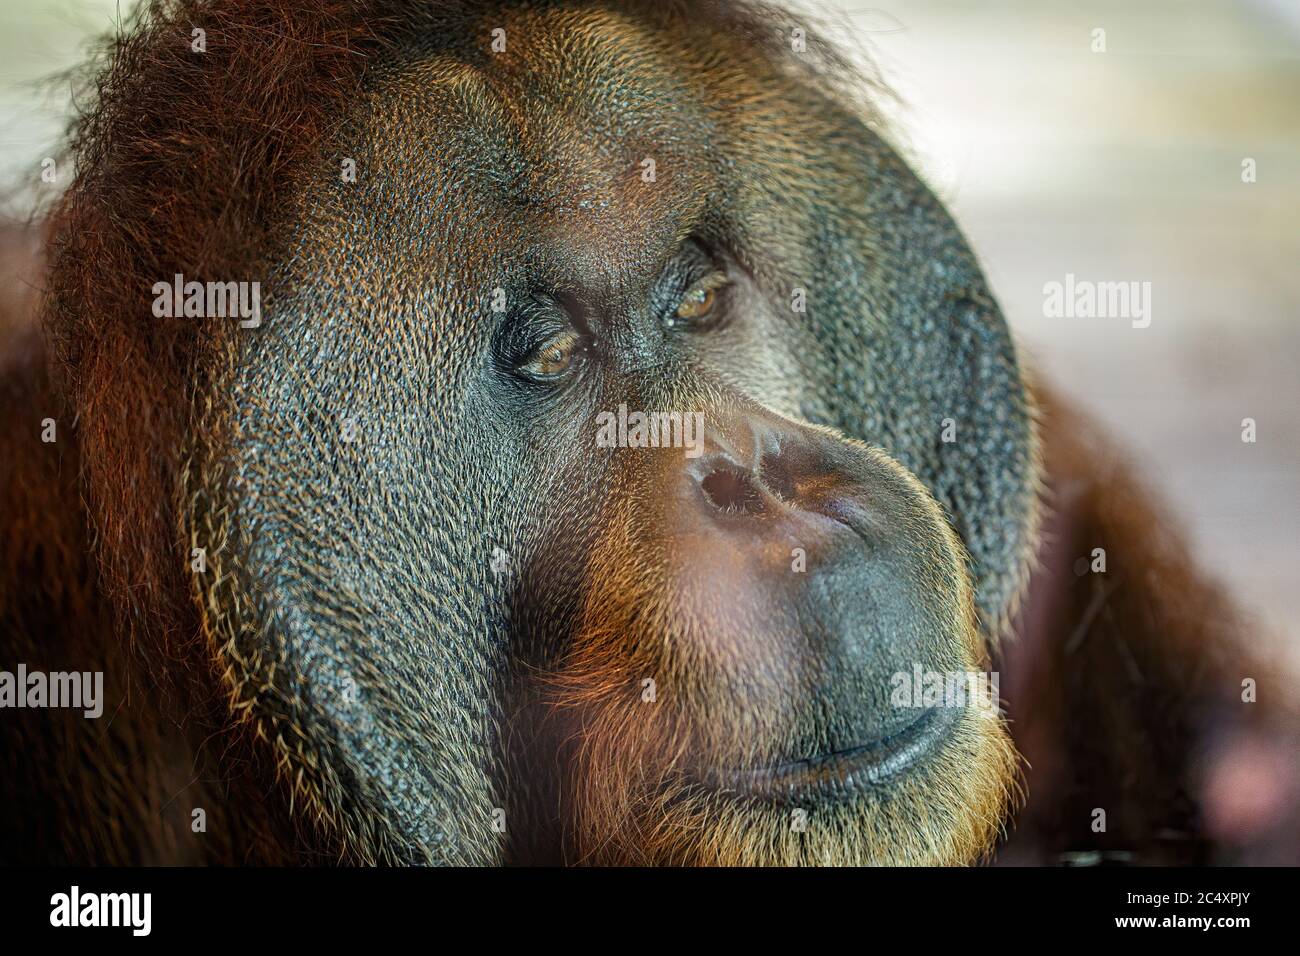 Bornean orangutan (Pongo pygmaeus) is a species of orangutan native to the island of Borneo. Is a critically endangered species, with deforestation, p Stock Photo